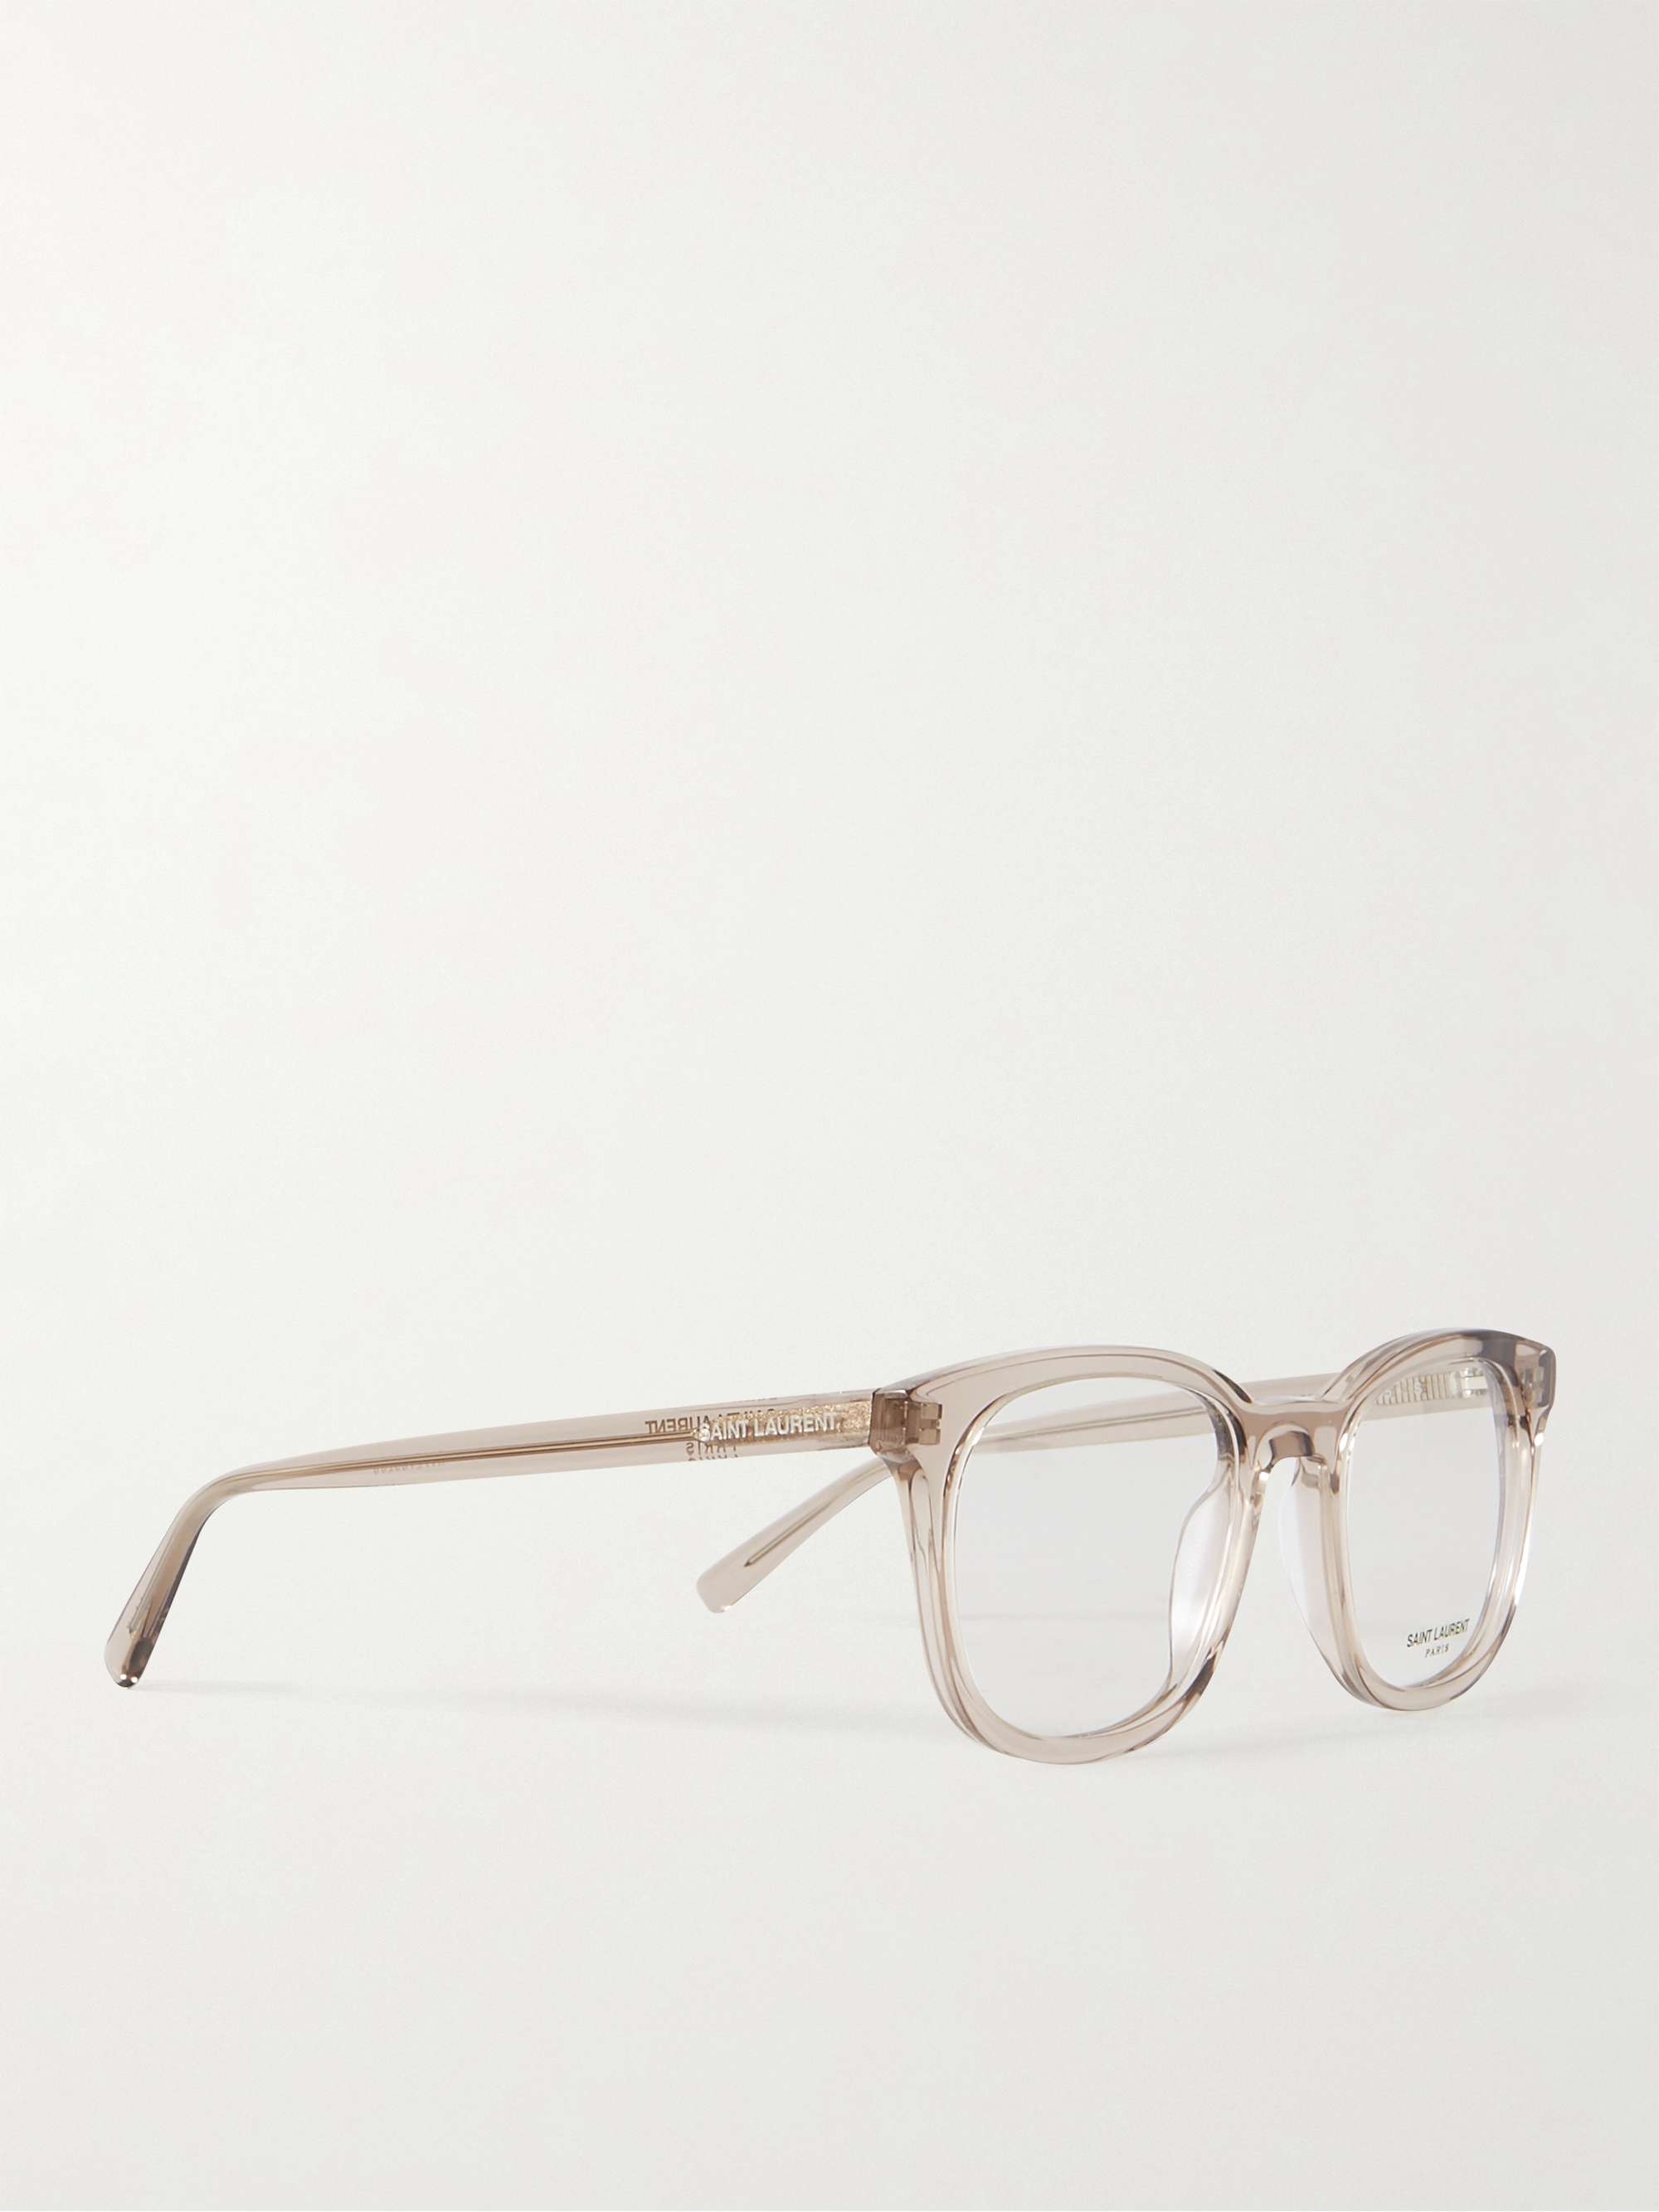 SAINT LAURENT EYEWEAR D-Frame Acetate Optical Glasses